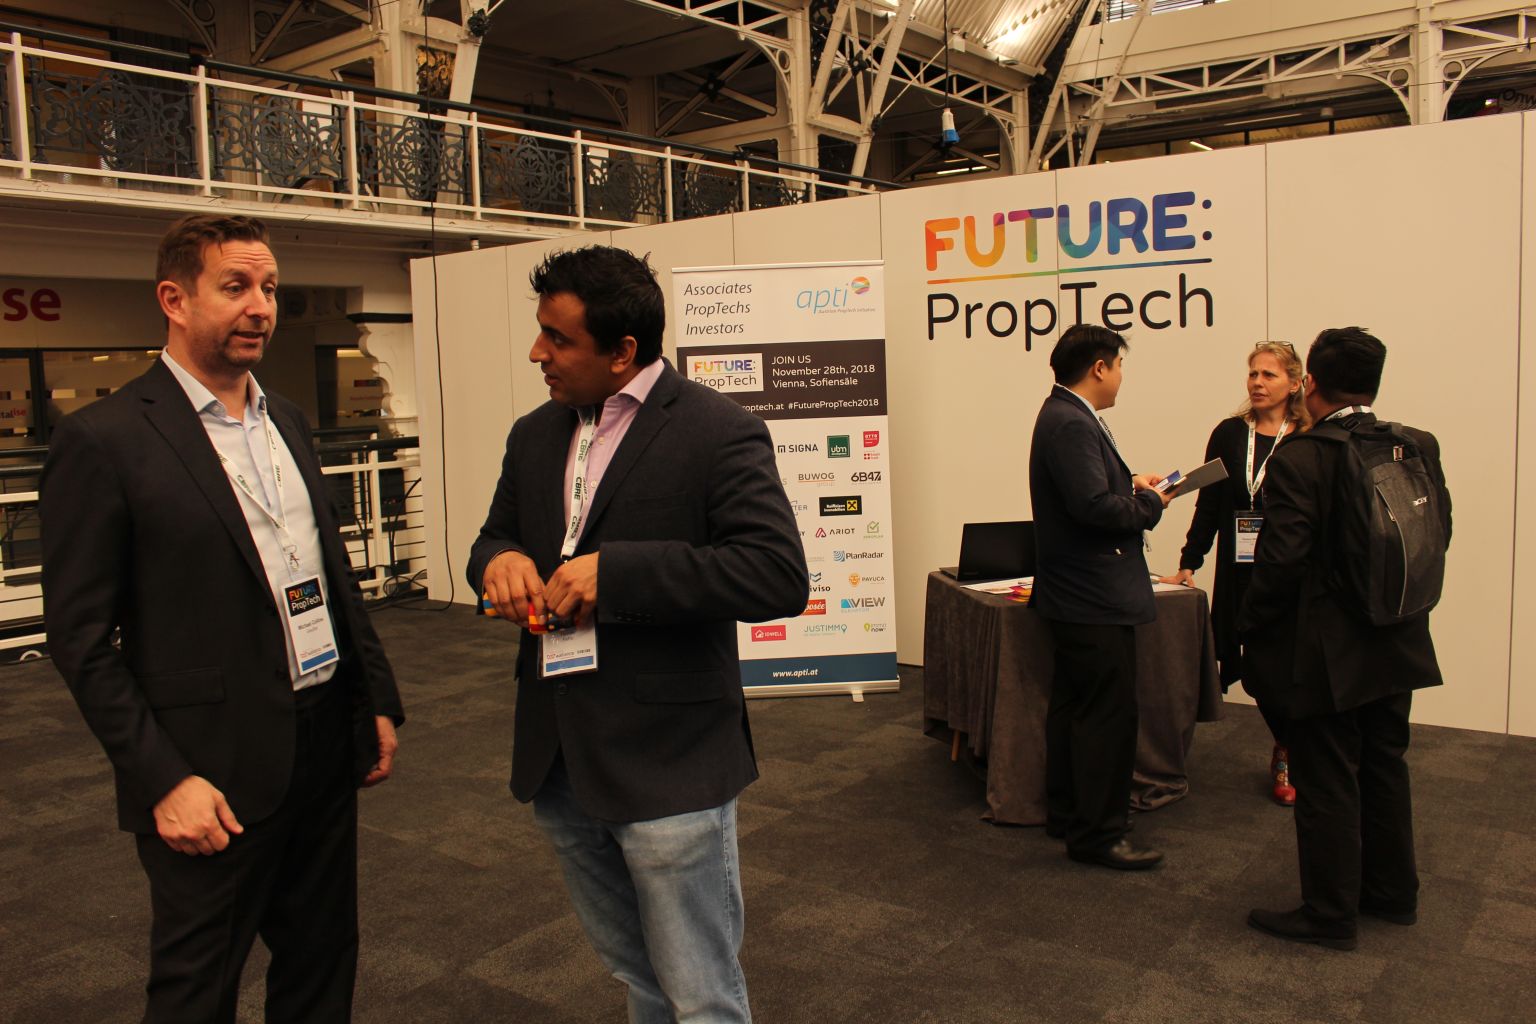 FUTURE: PropTech London 2018